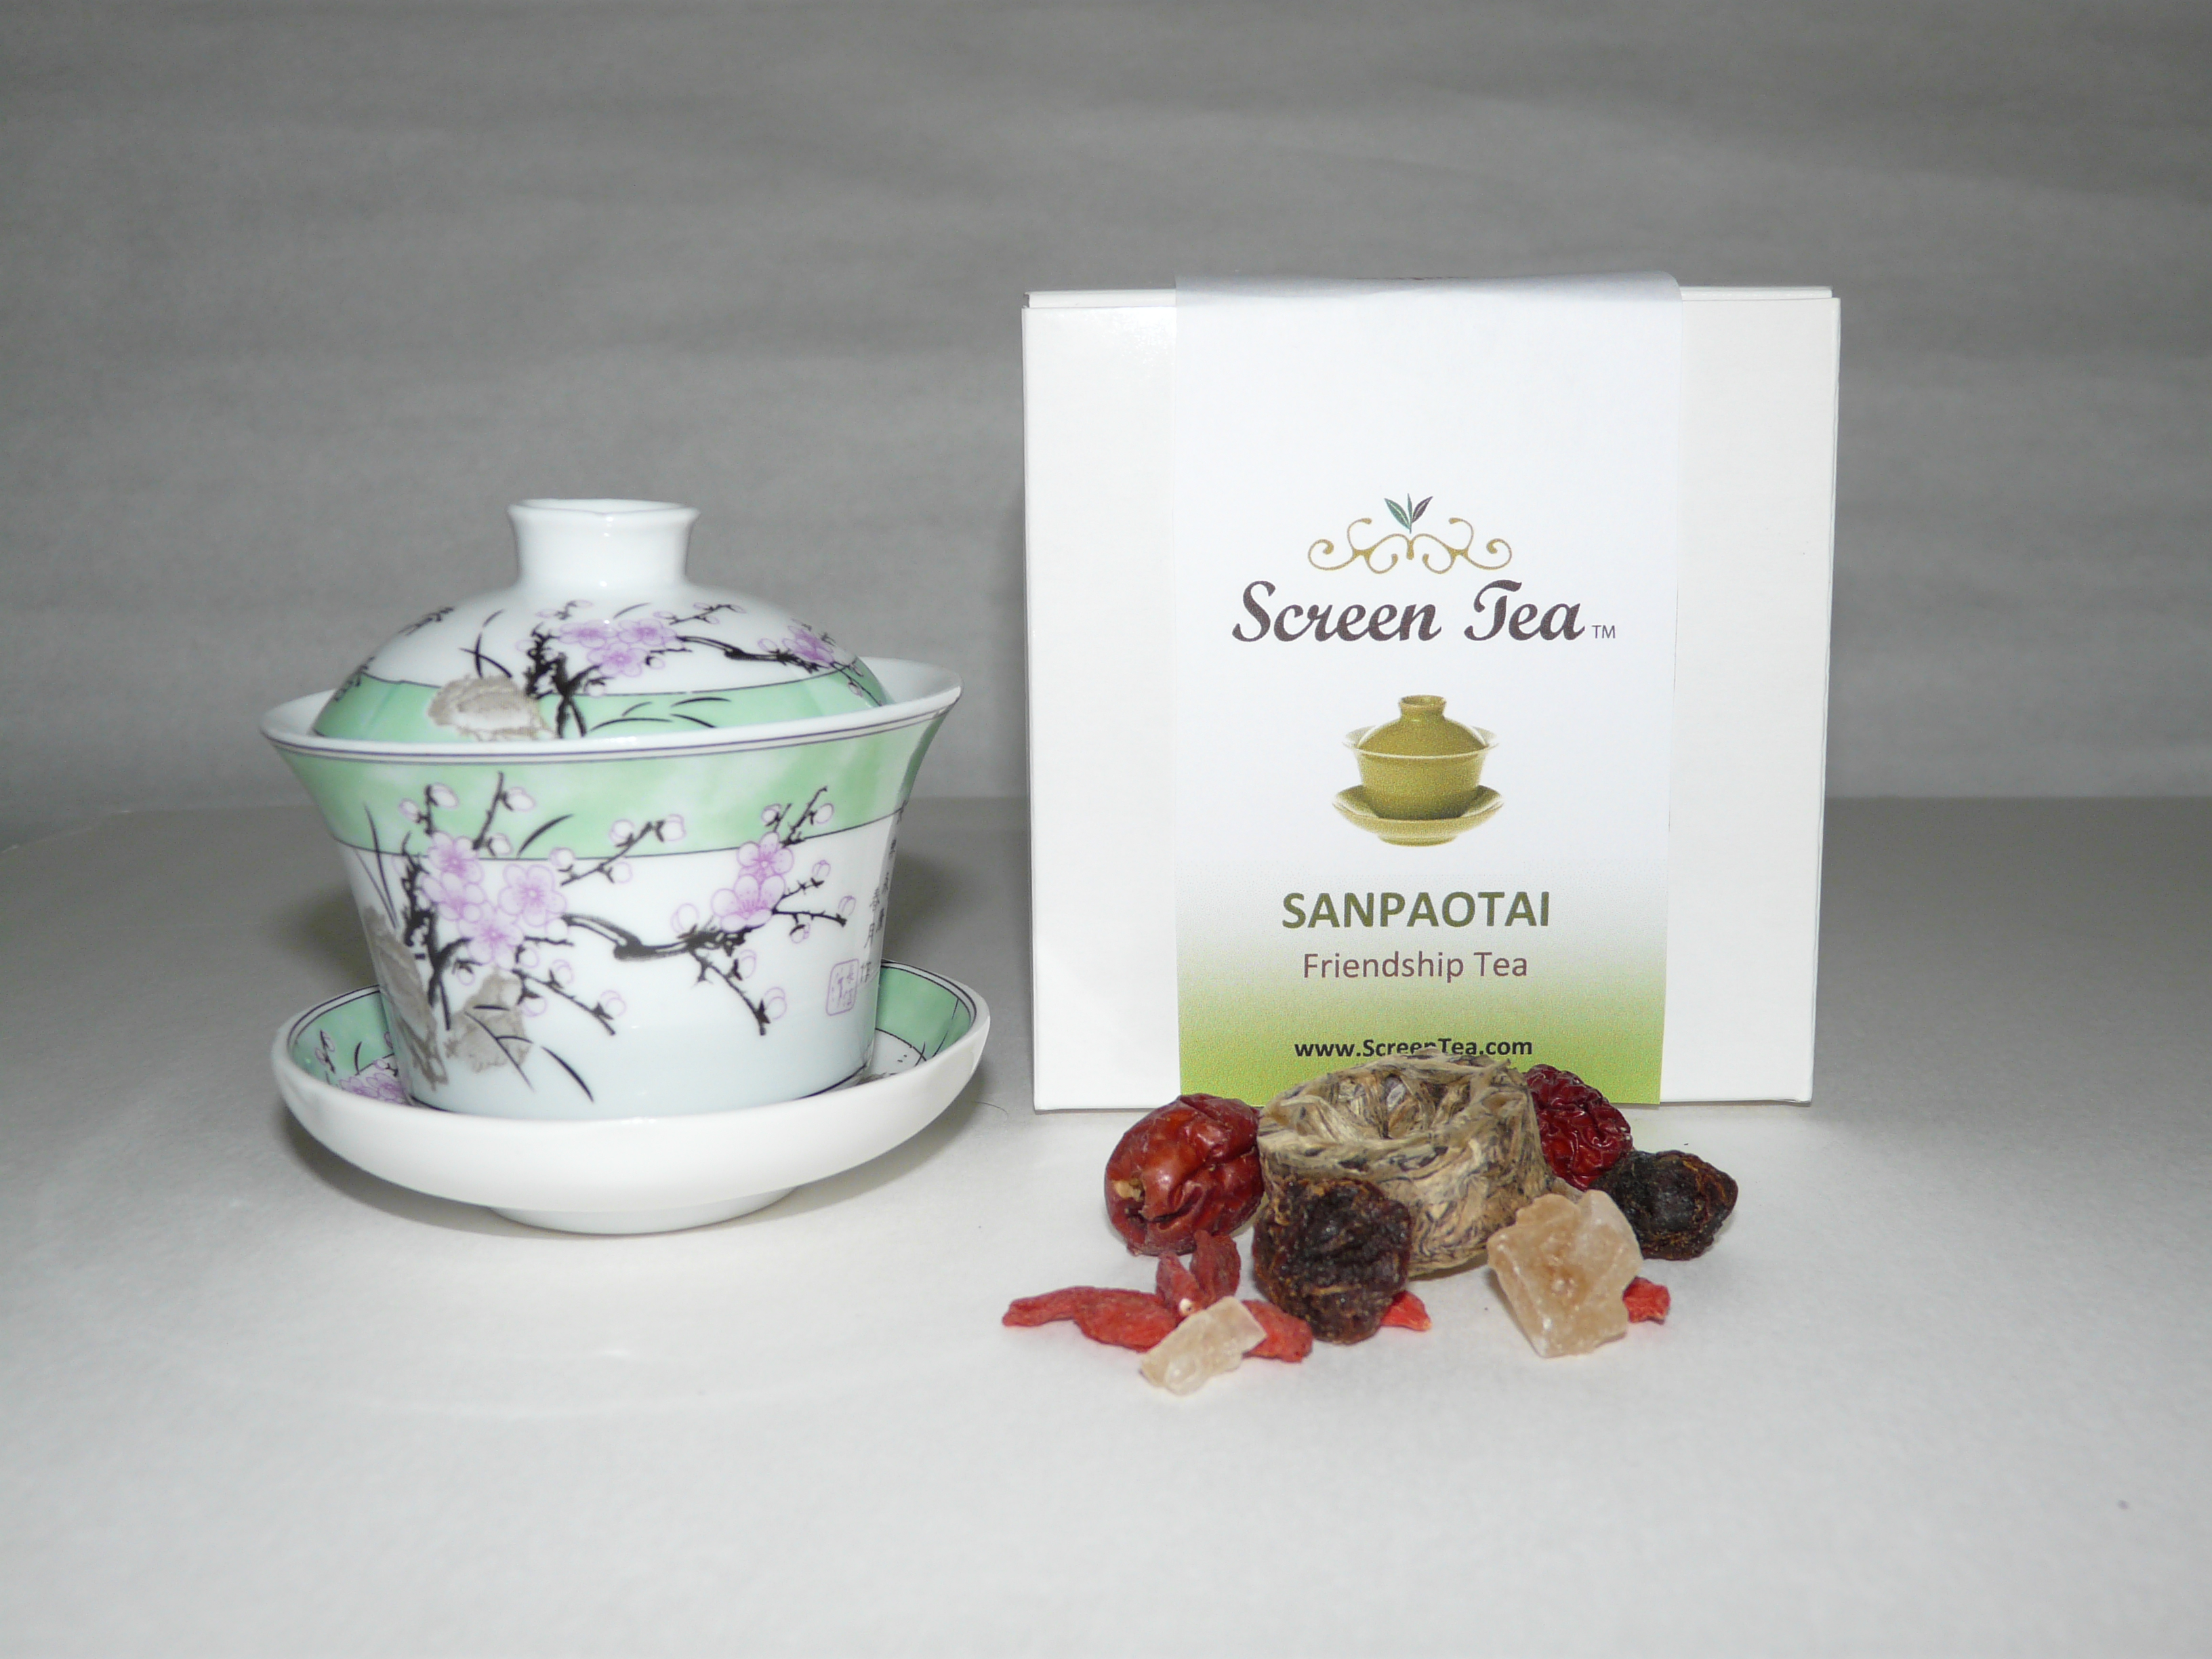 SANPAOTAI - Friendship Tea